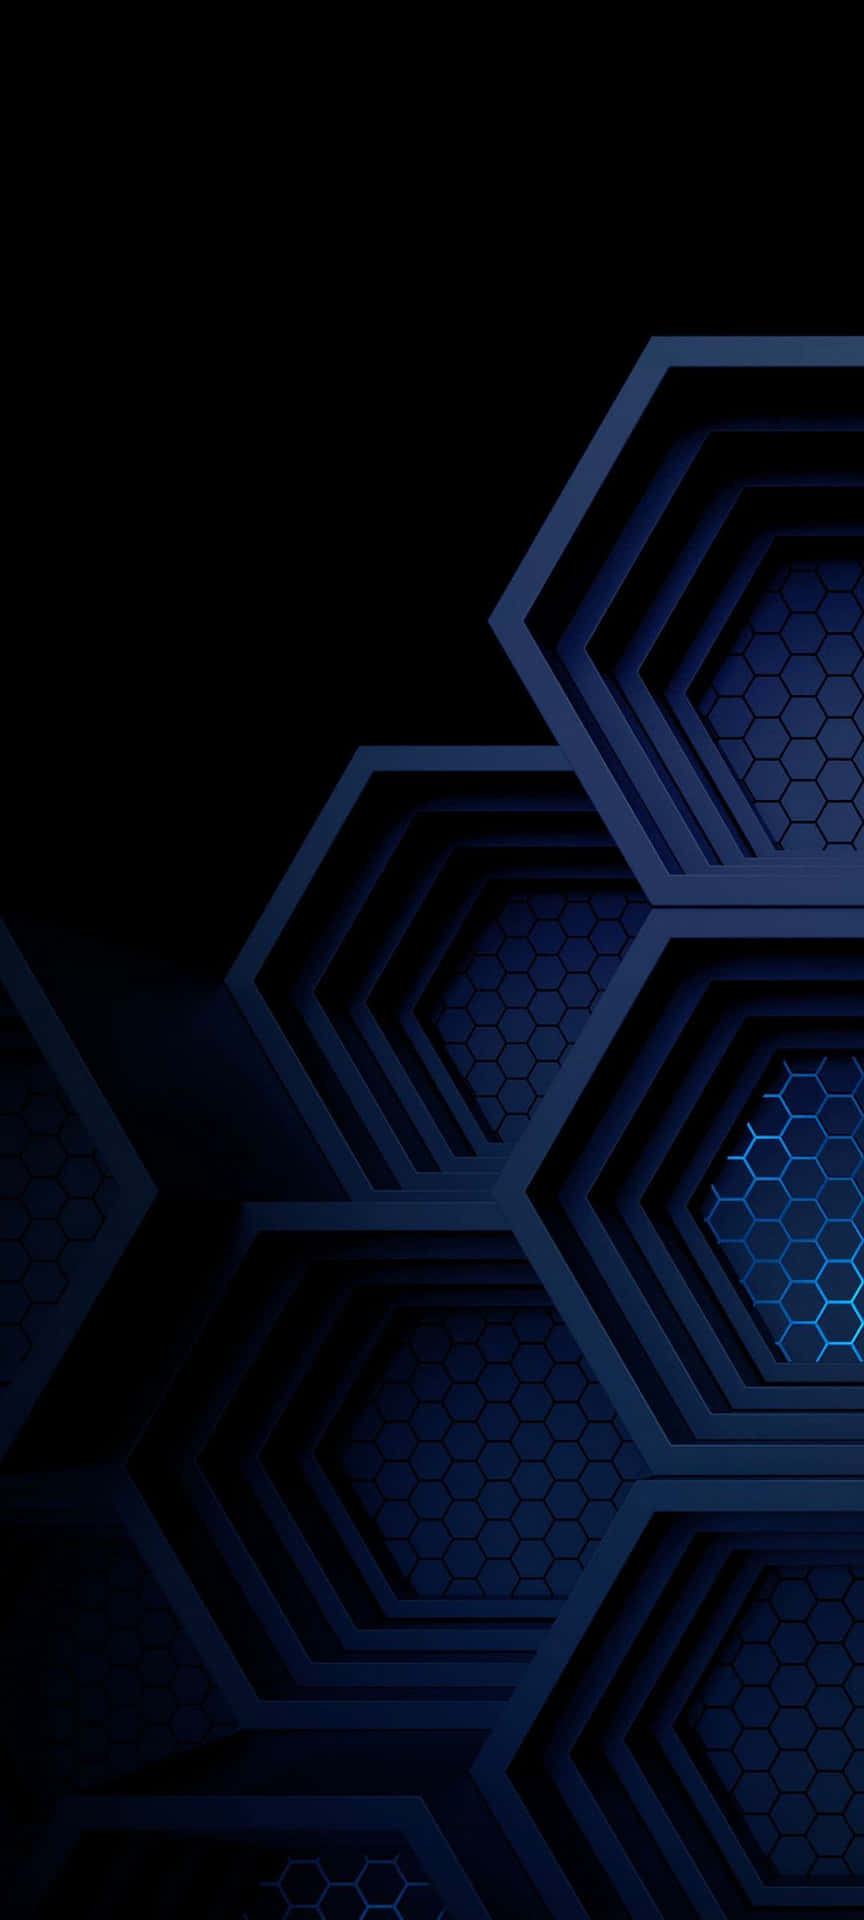 Blue Hexagonal Background With Blue Lights Wallpaper